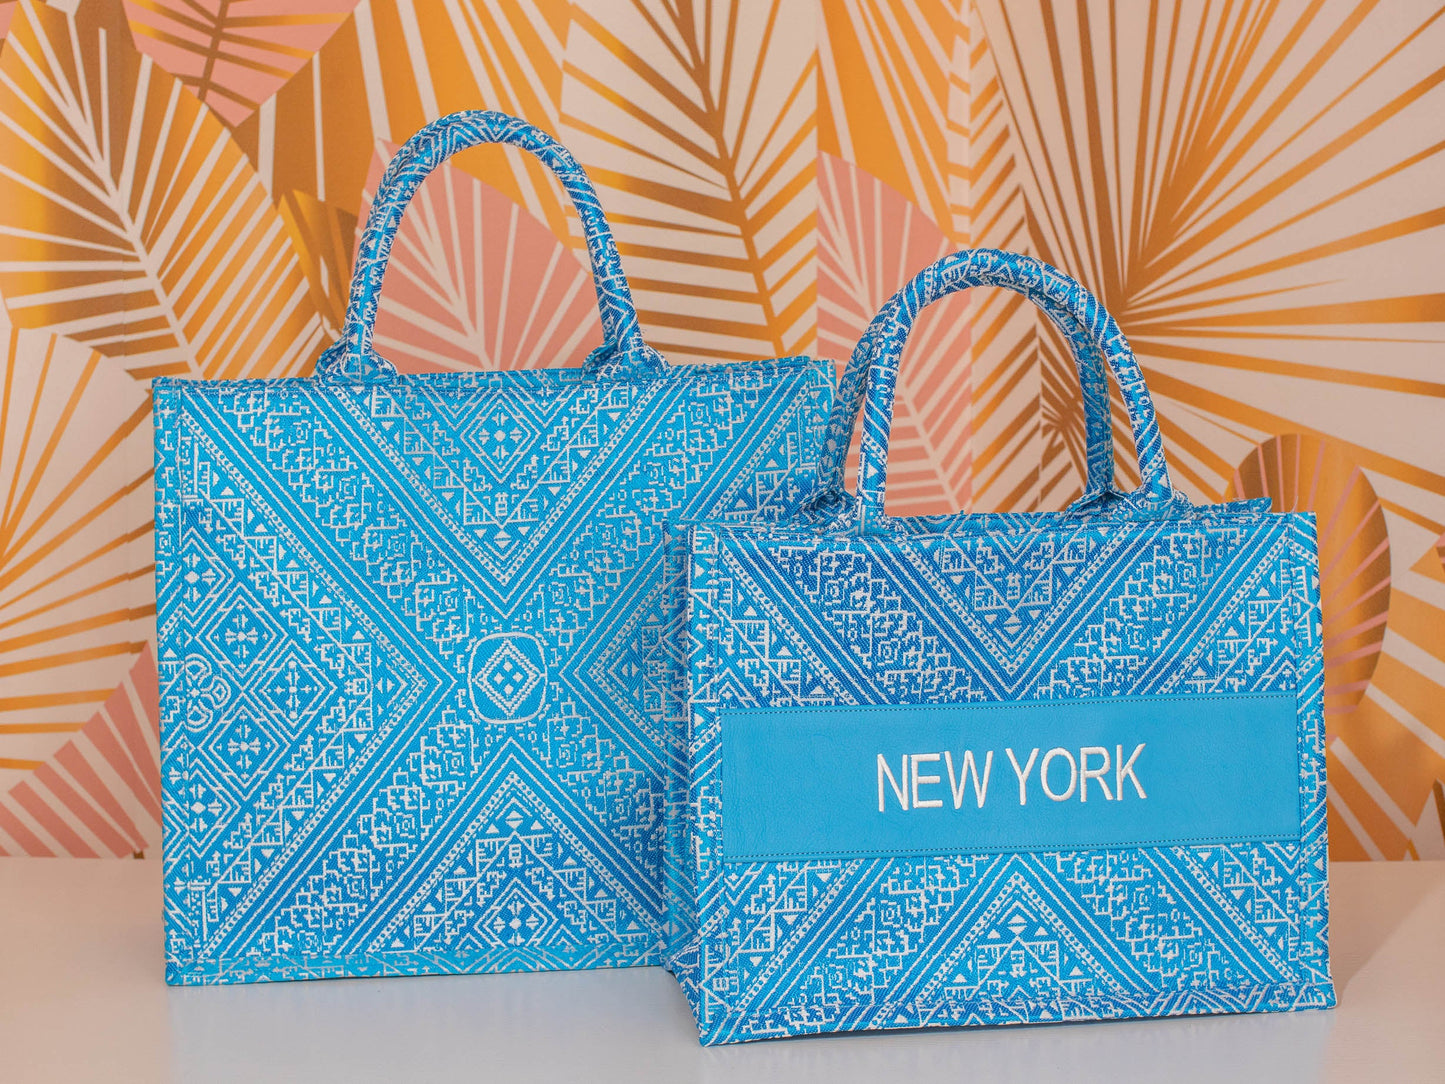 Large Tote CD New York - Premium Bag from Marina St. Barth - Just $100! Shop now at Marina St Barth